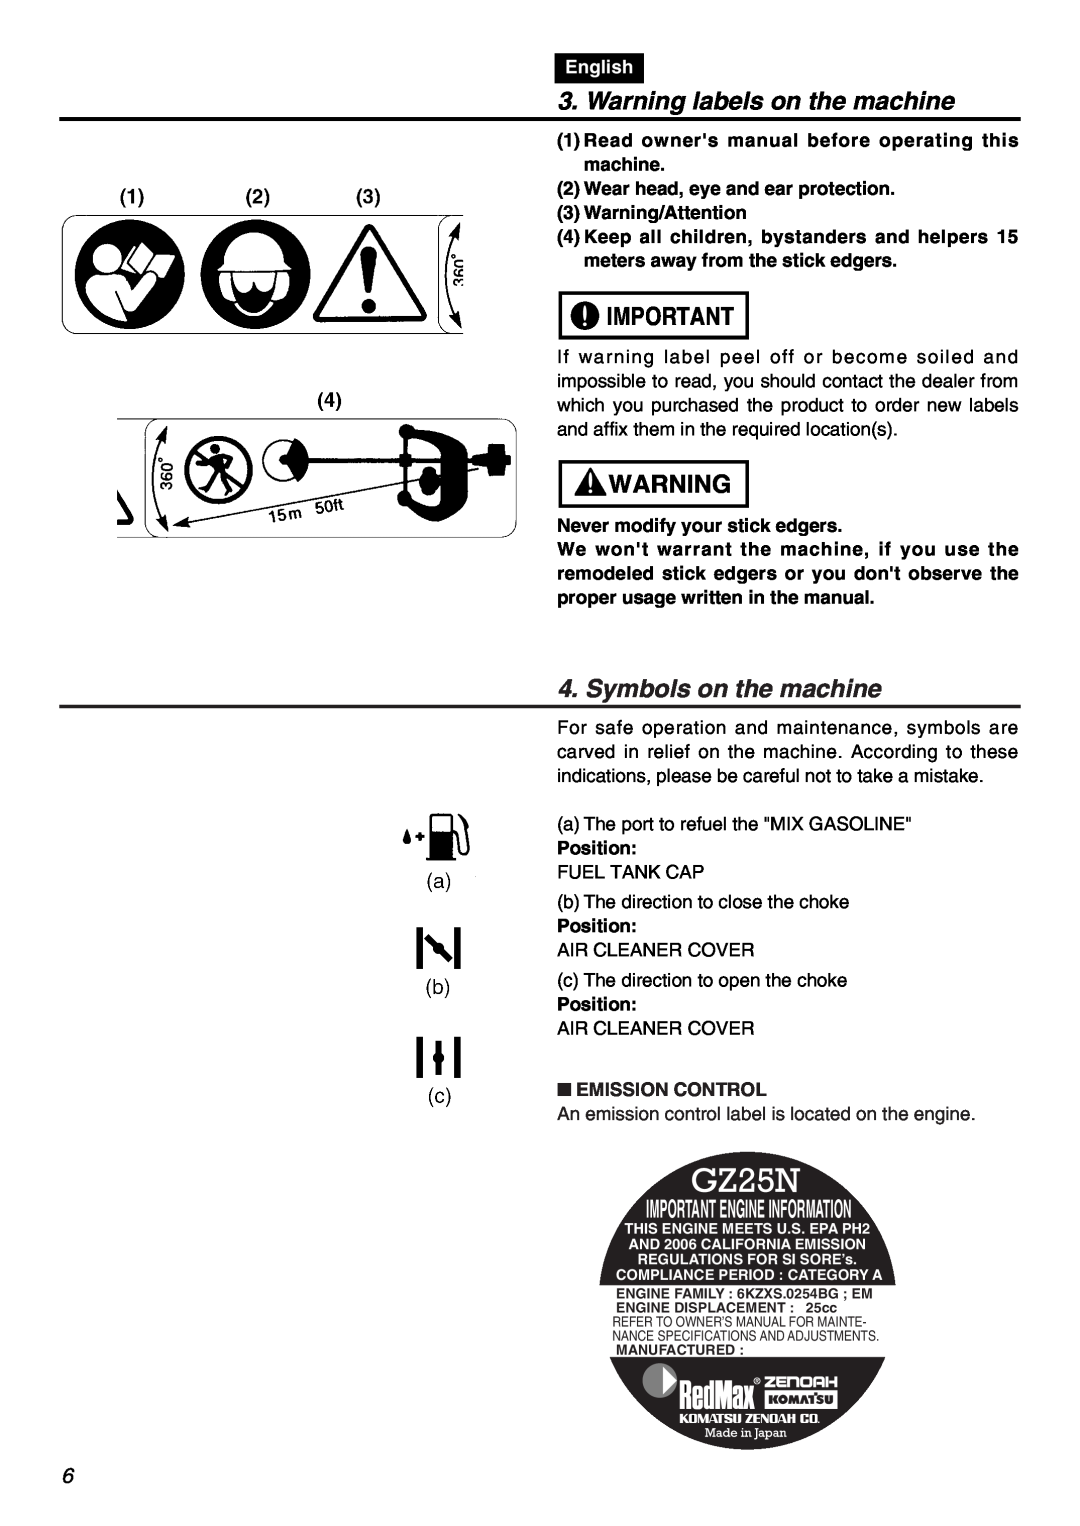 Zenoah HEZ2602S manual Warning labels on the machine, Symbols on the machine, Important Engine Information, English 